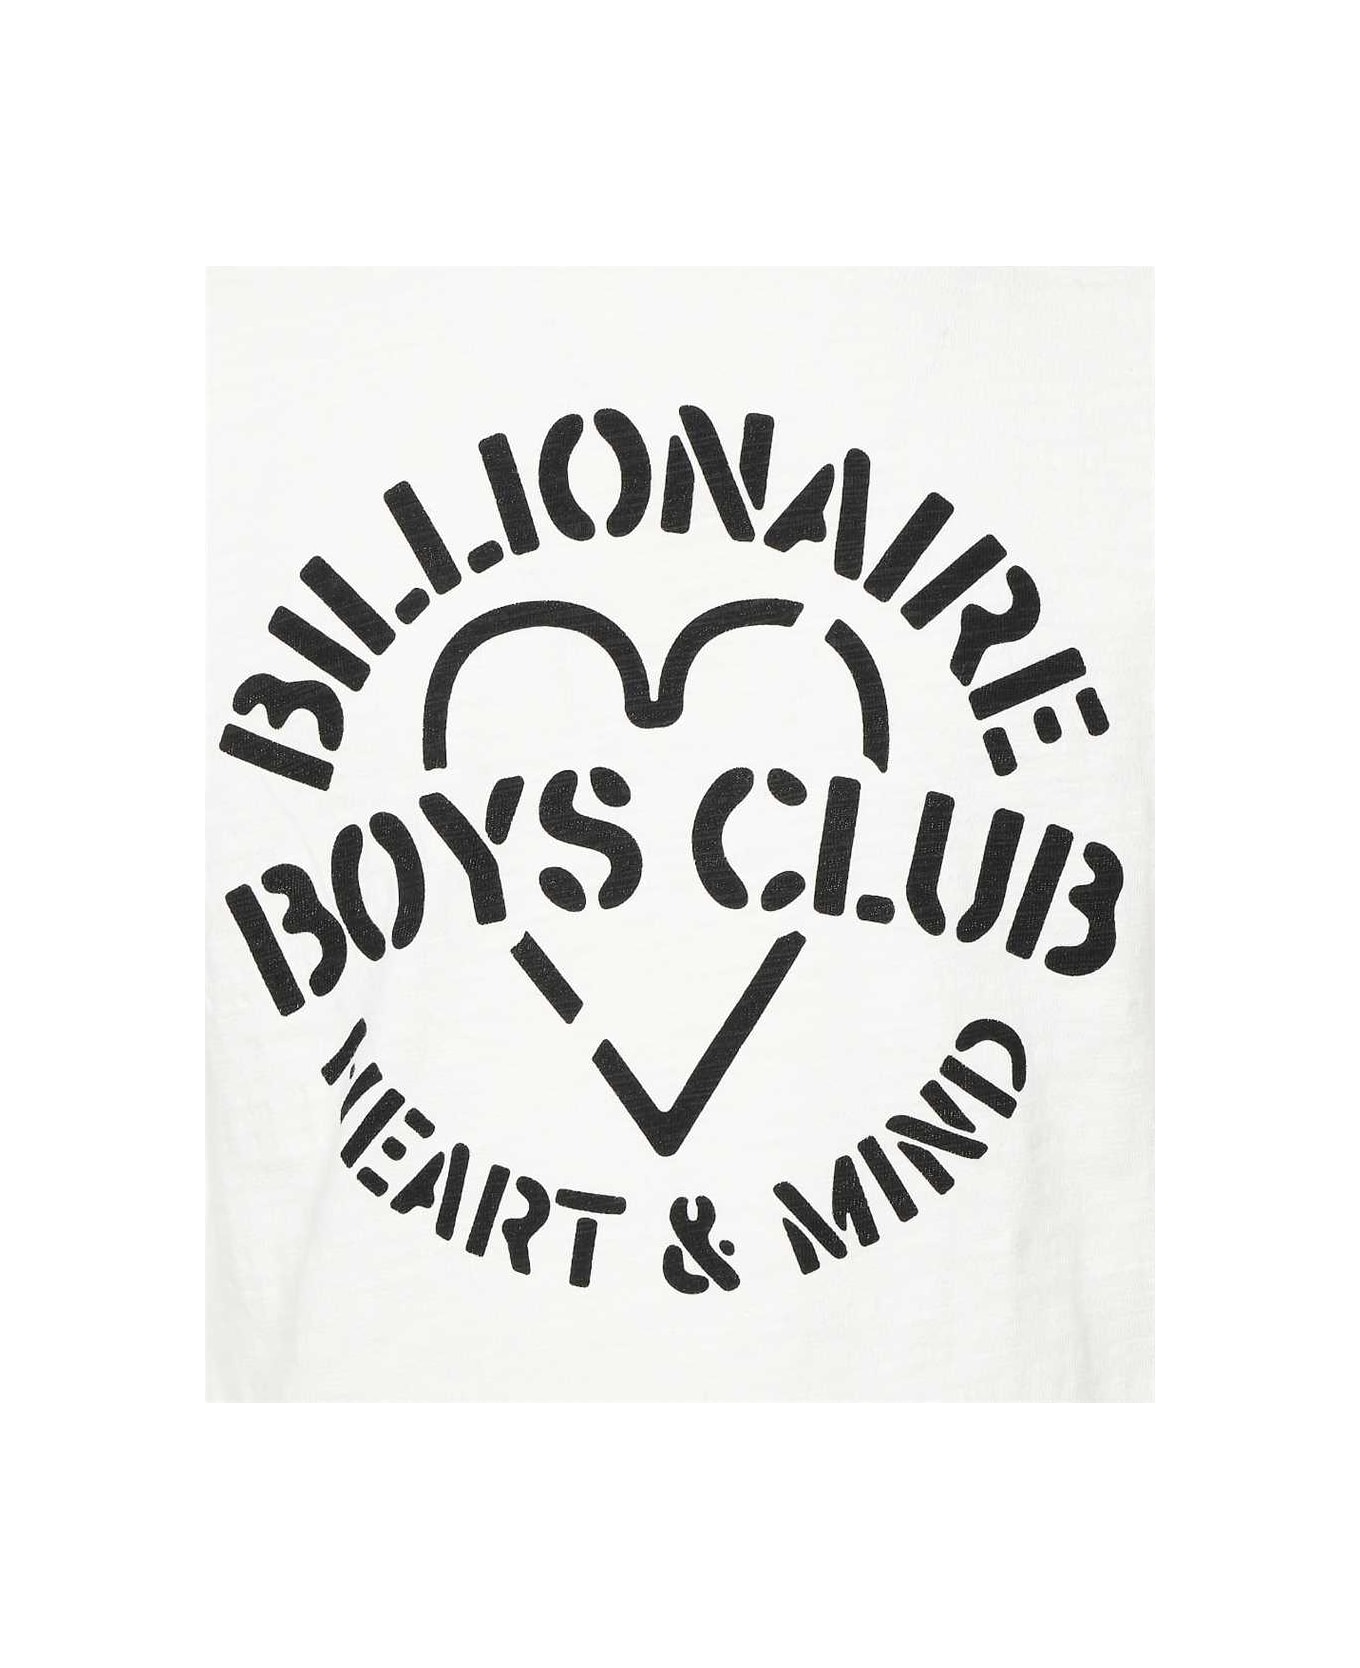 Billionaire Boys Club Cotton T-shirt - White